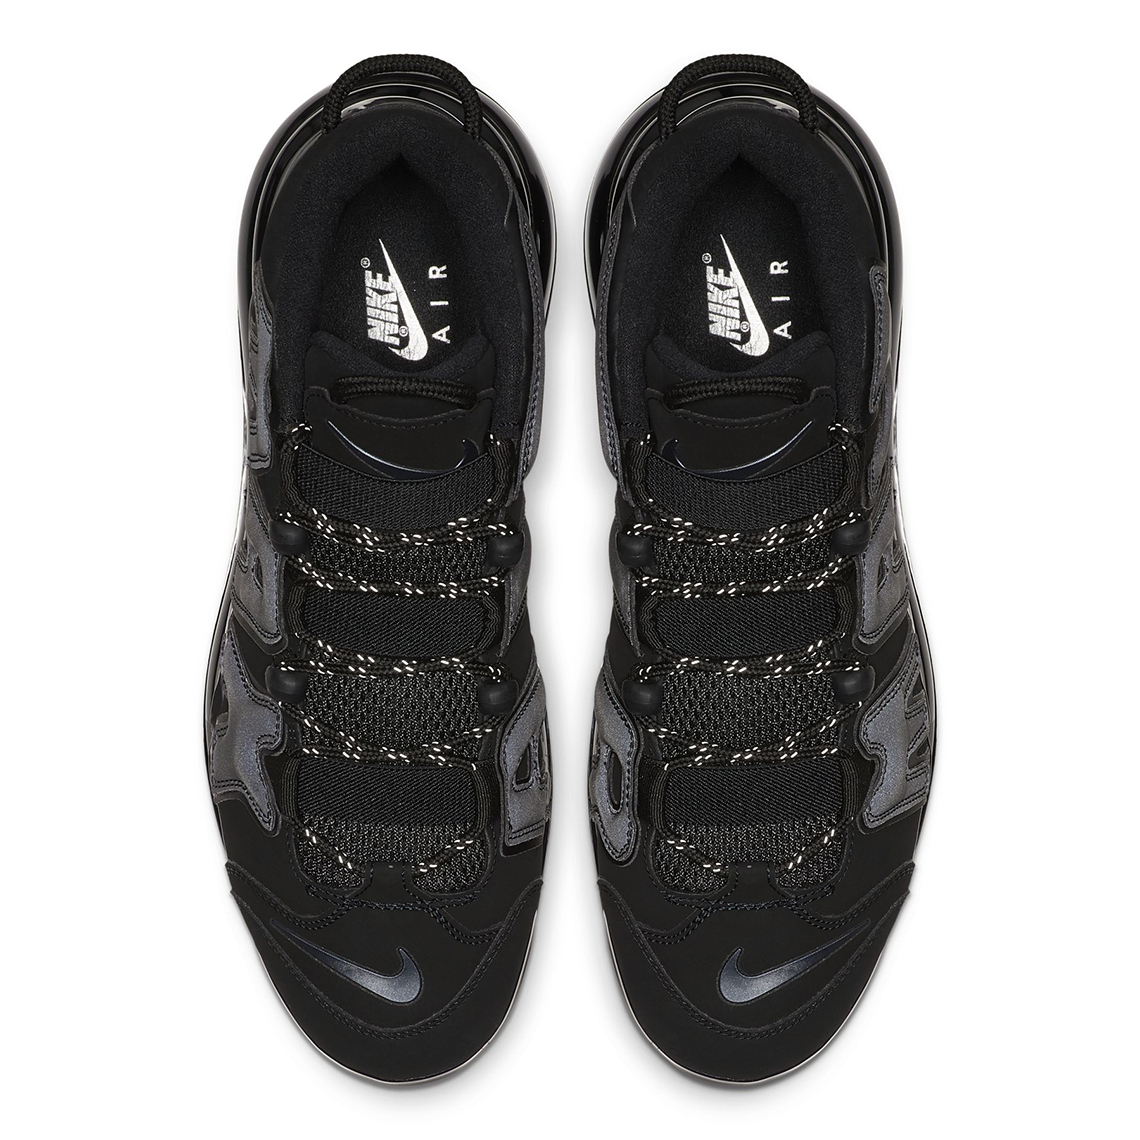 Nike nike roshe purple suede sandals for women black 720 Qs Black 3